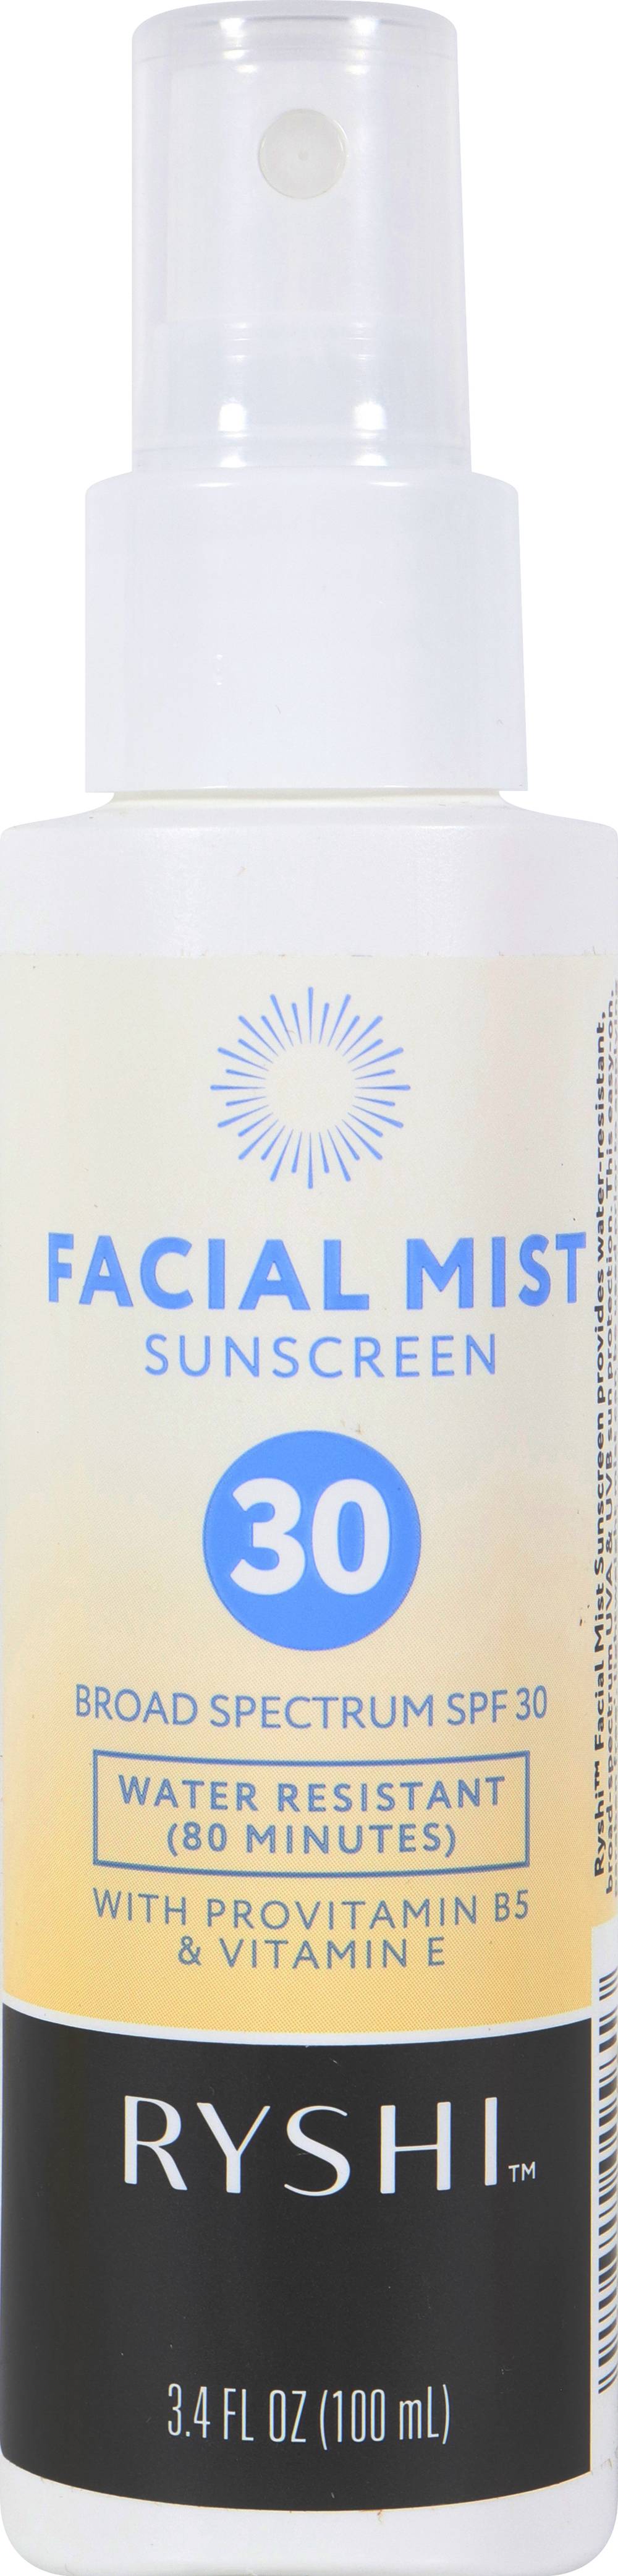 Ryshi Face Mist Sunscreen - SPF30, 3.4 fl oz